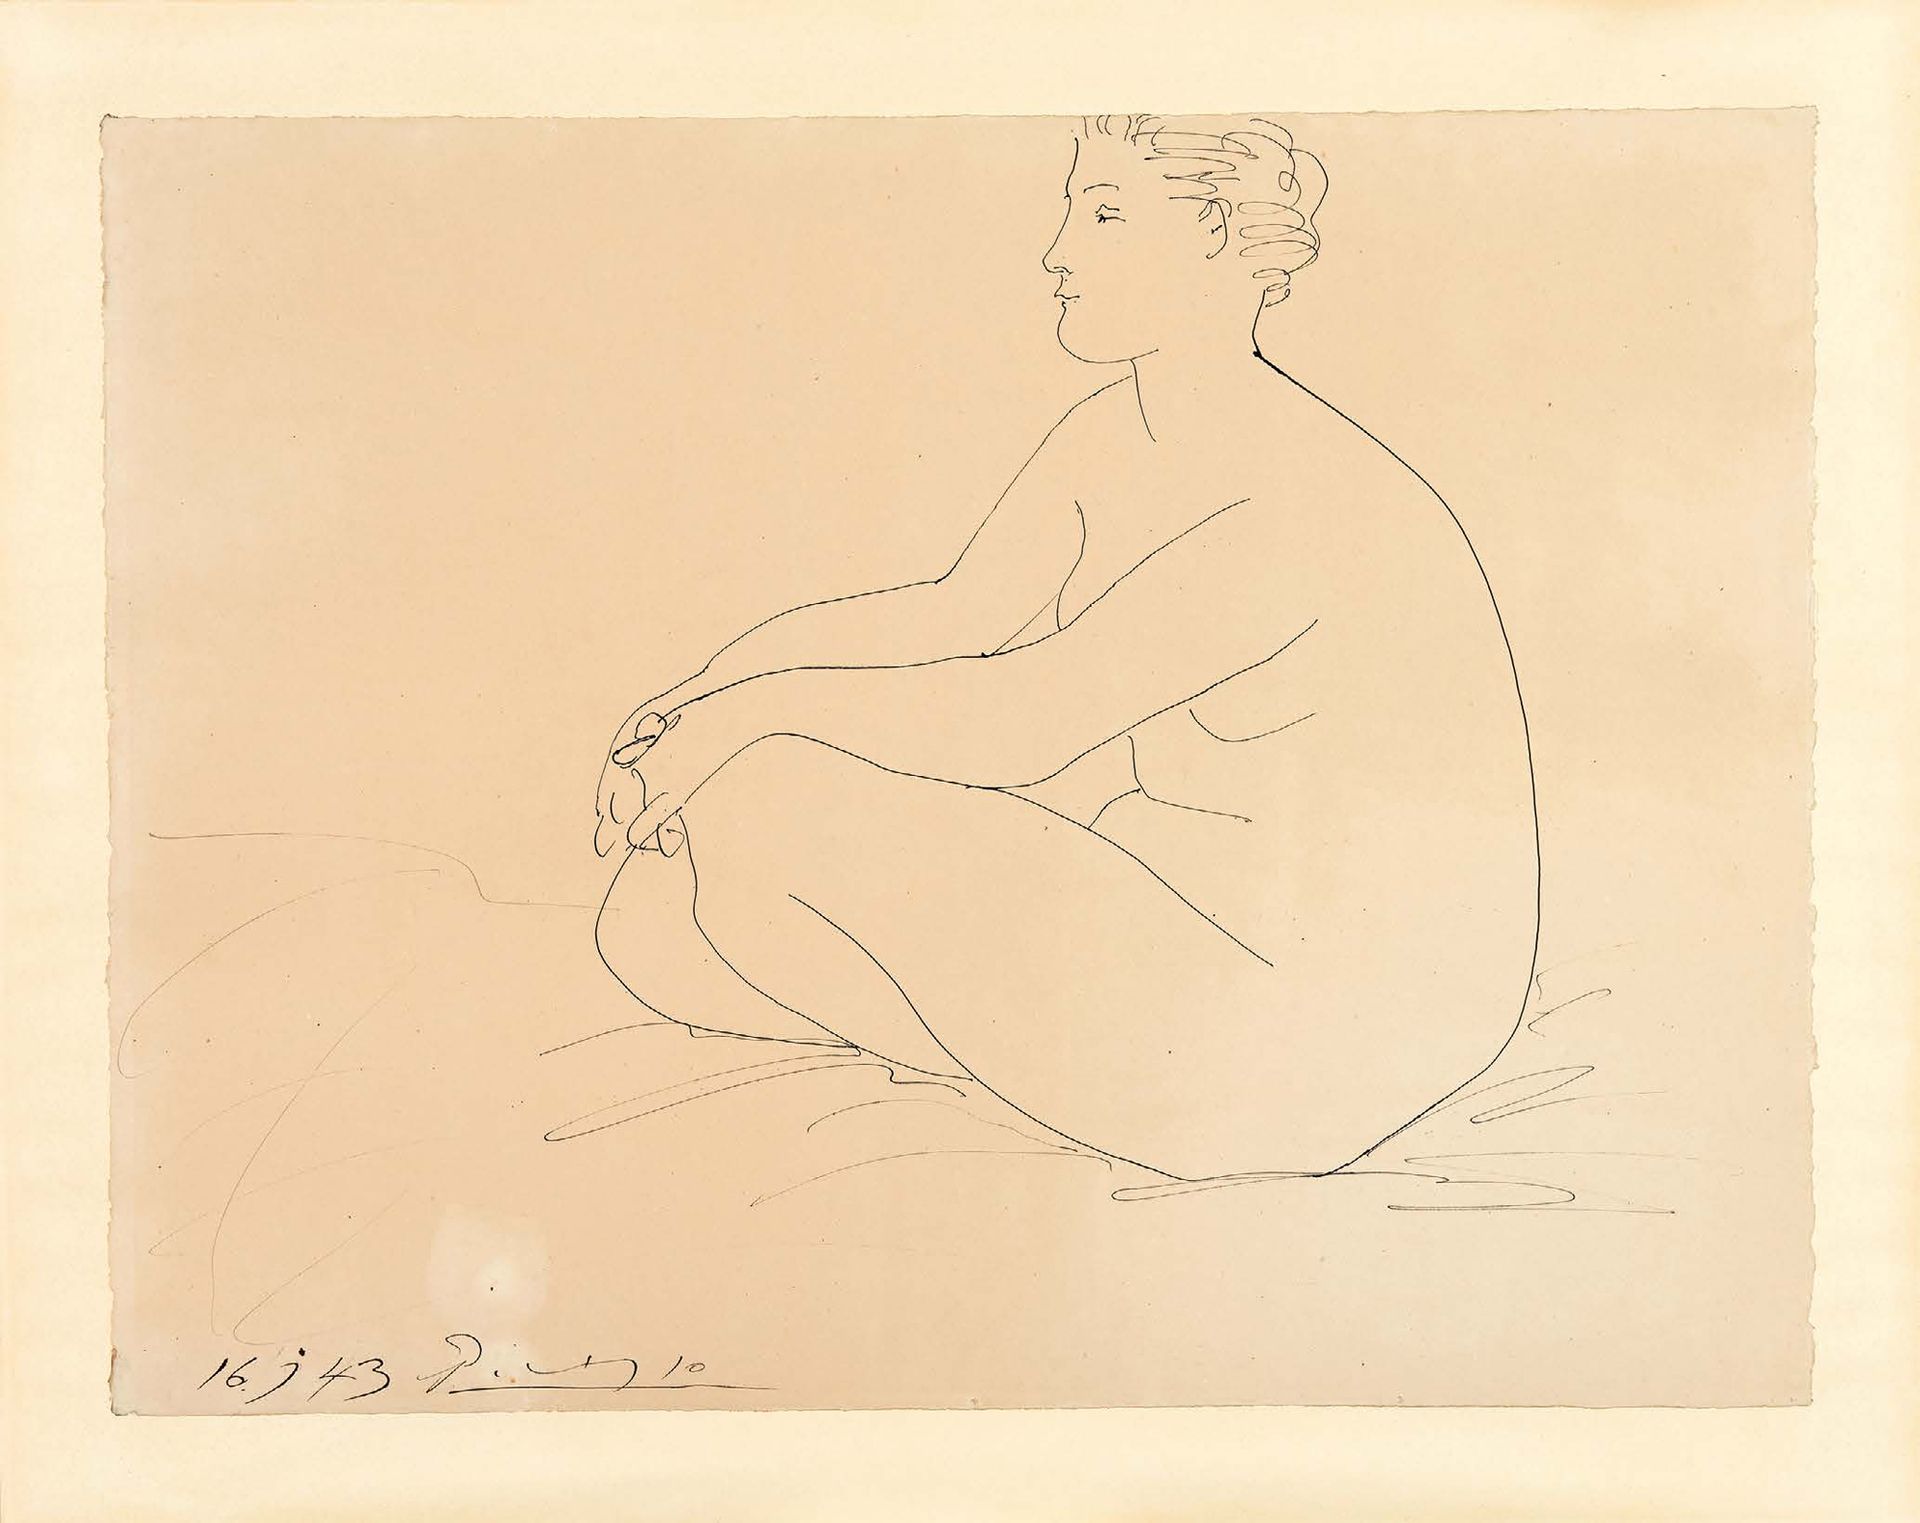 Pablo Picasso (1881-1973) 坐着的女人，1943年
水墨画，左下角有签名和日期 "16 J 43"。
50,5 x 66 cm
出处：
&hellip;